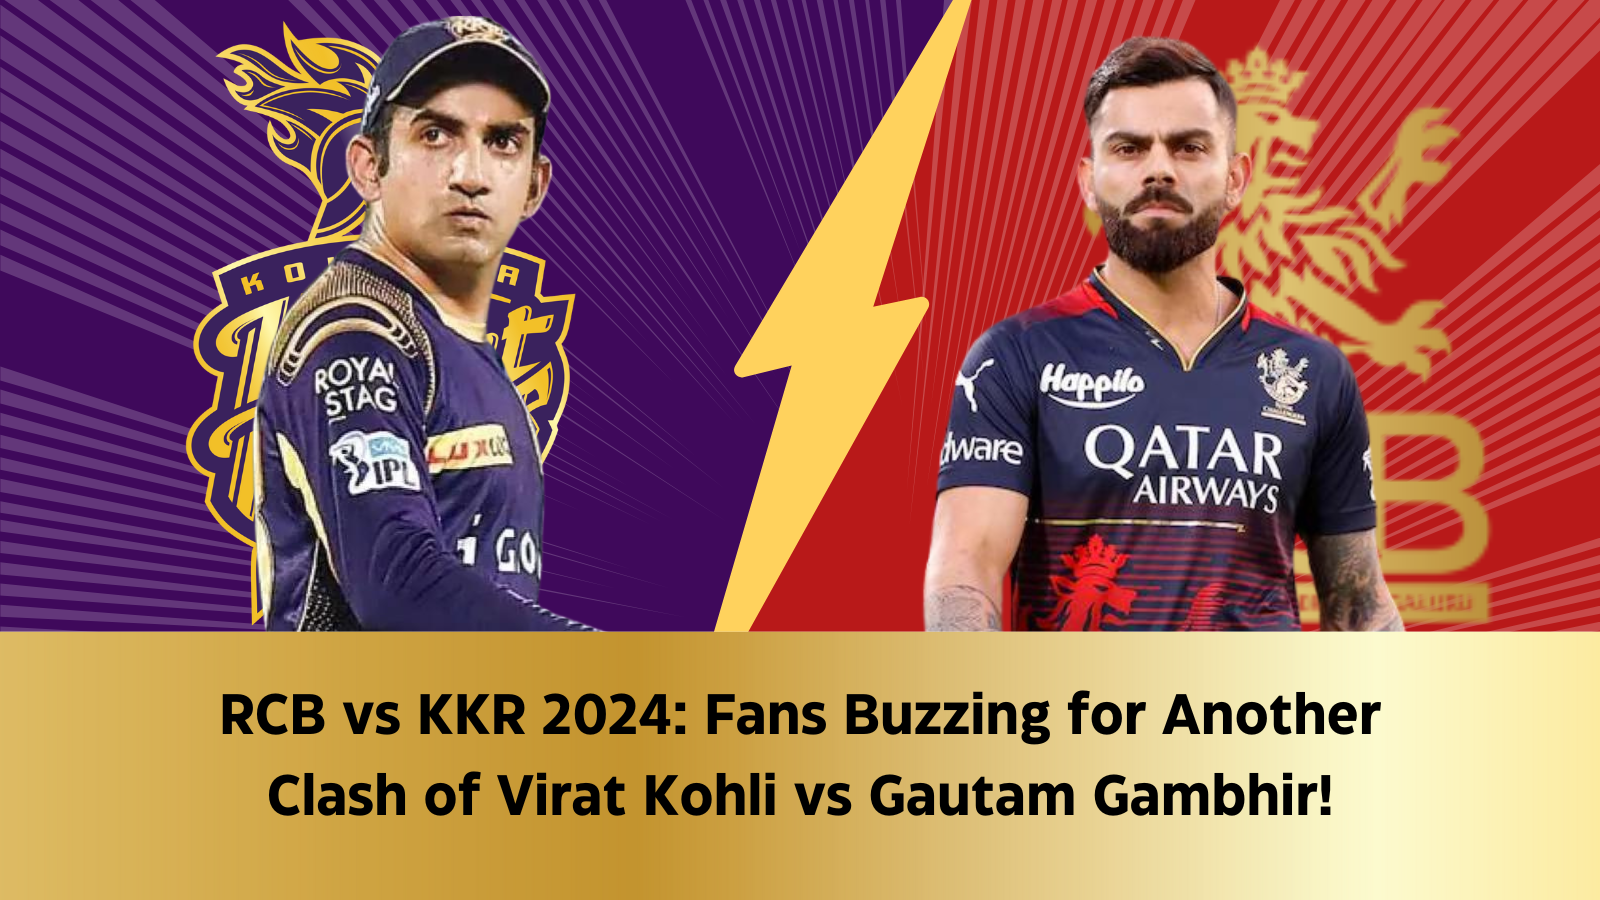 RCB vs KKR 2024 Fans Buzzing for Another Clash of Virat Kohli vs Gautam Gambhir!